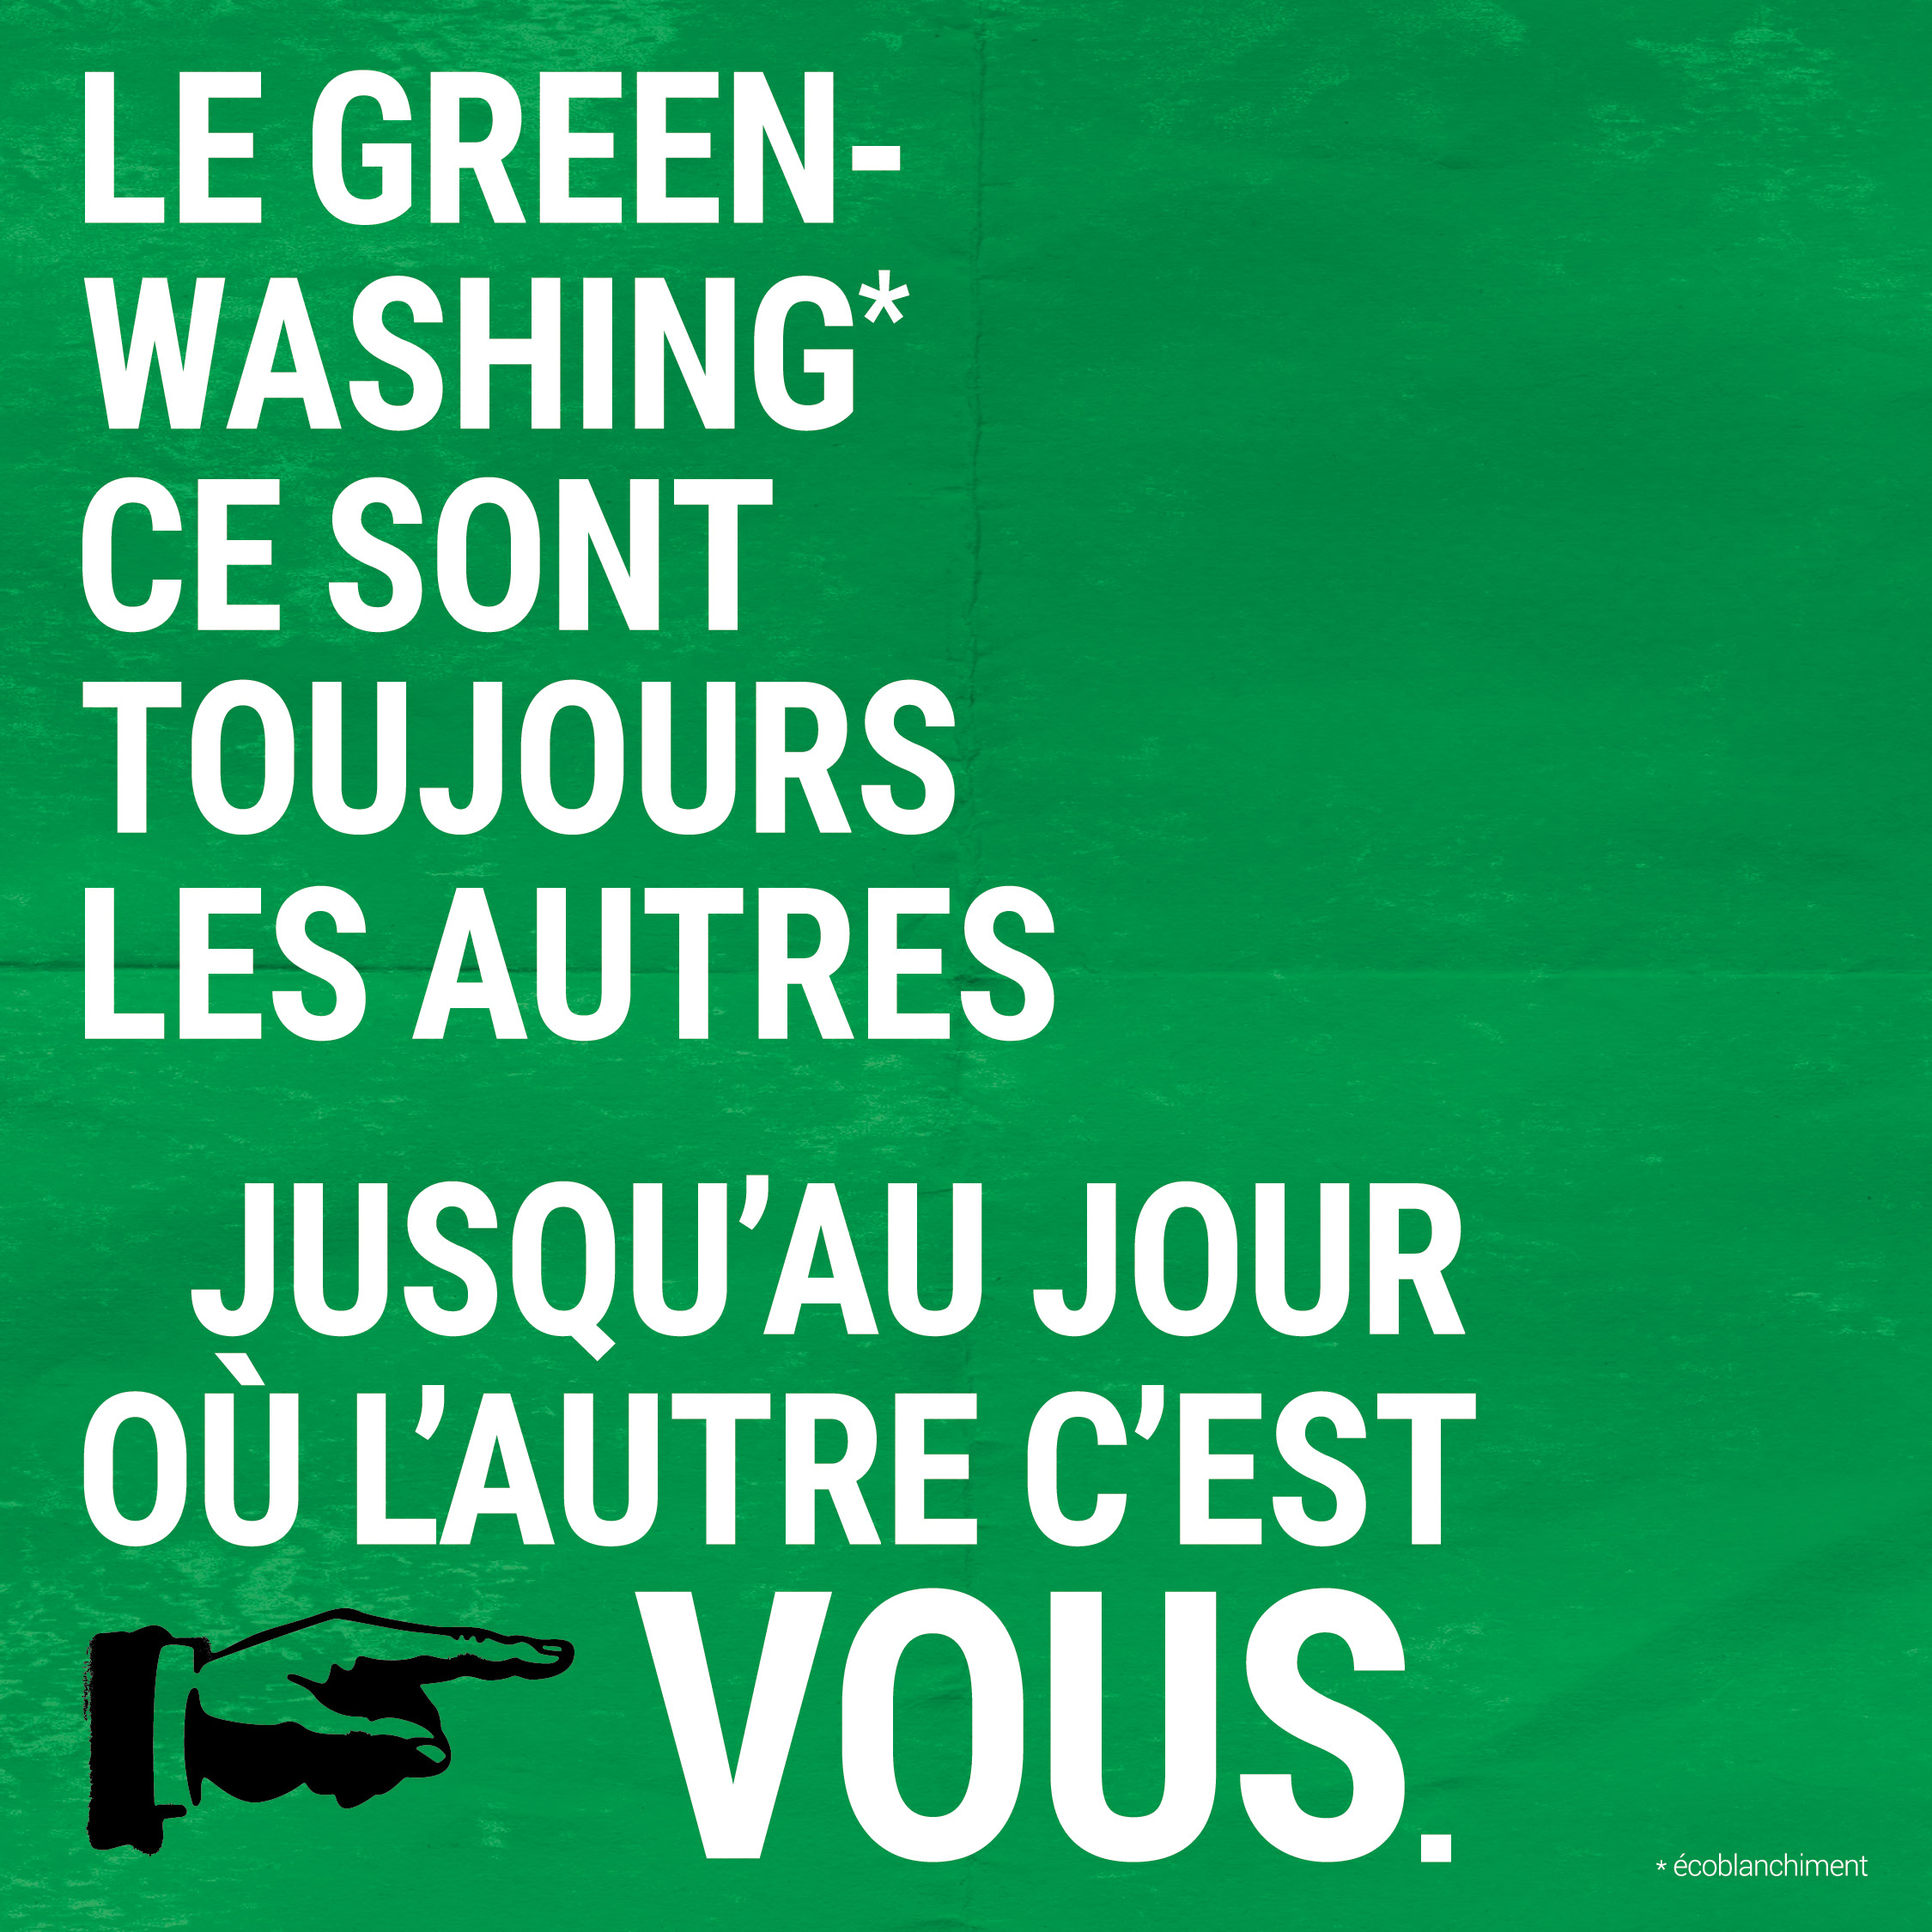 L’ARPP prévient le greenwashing avec Josiane